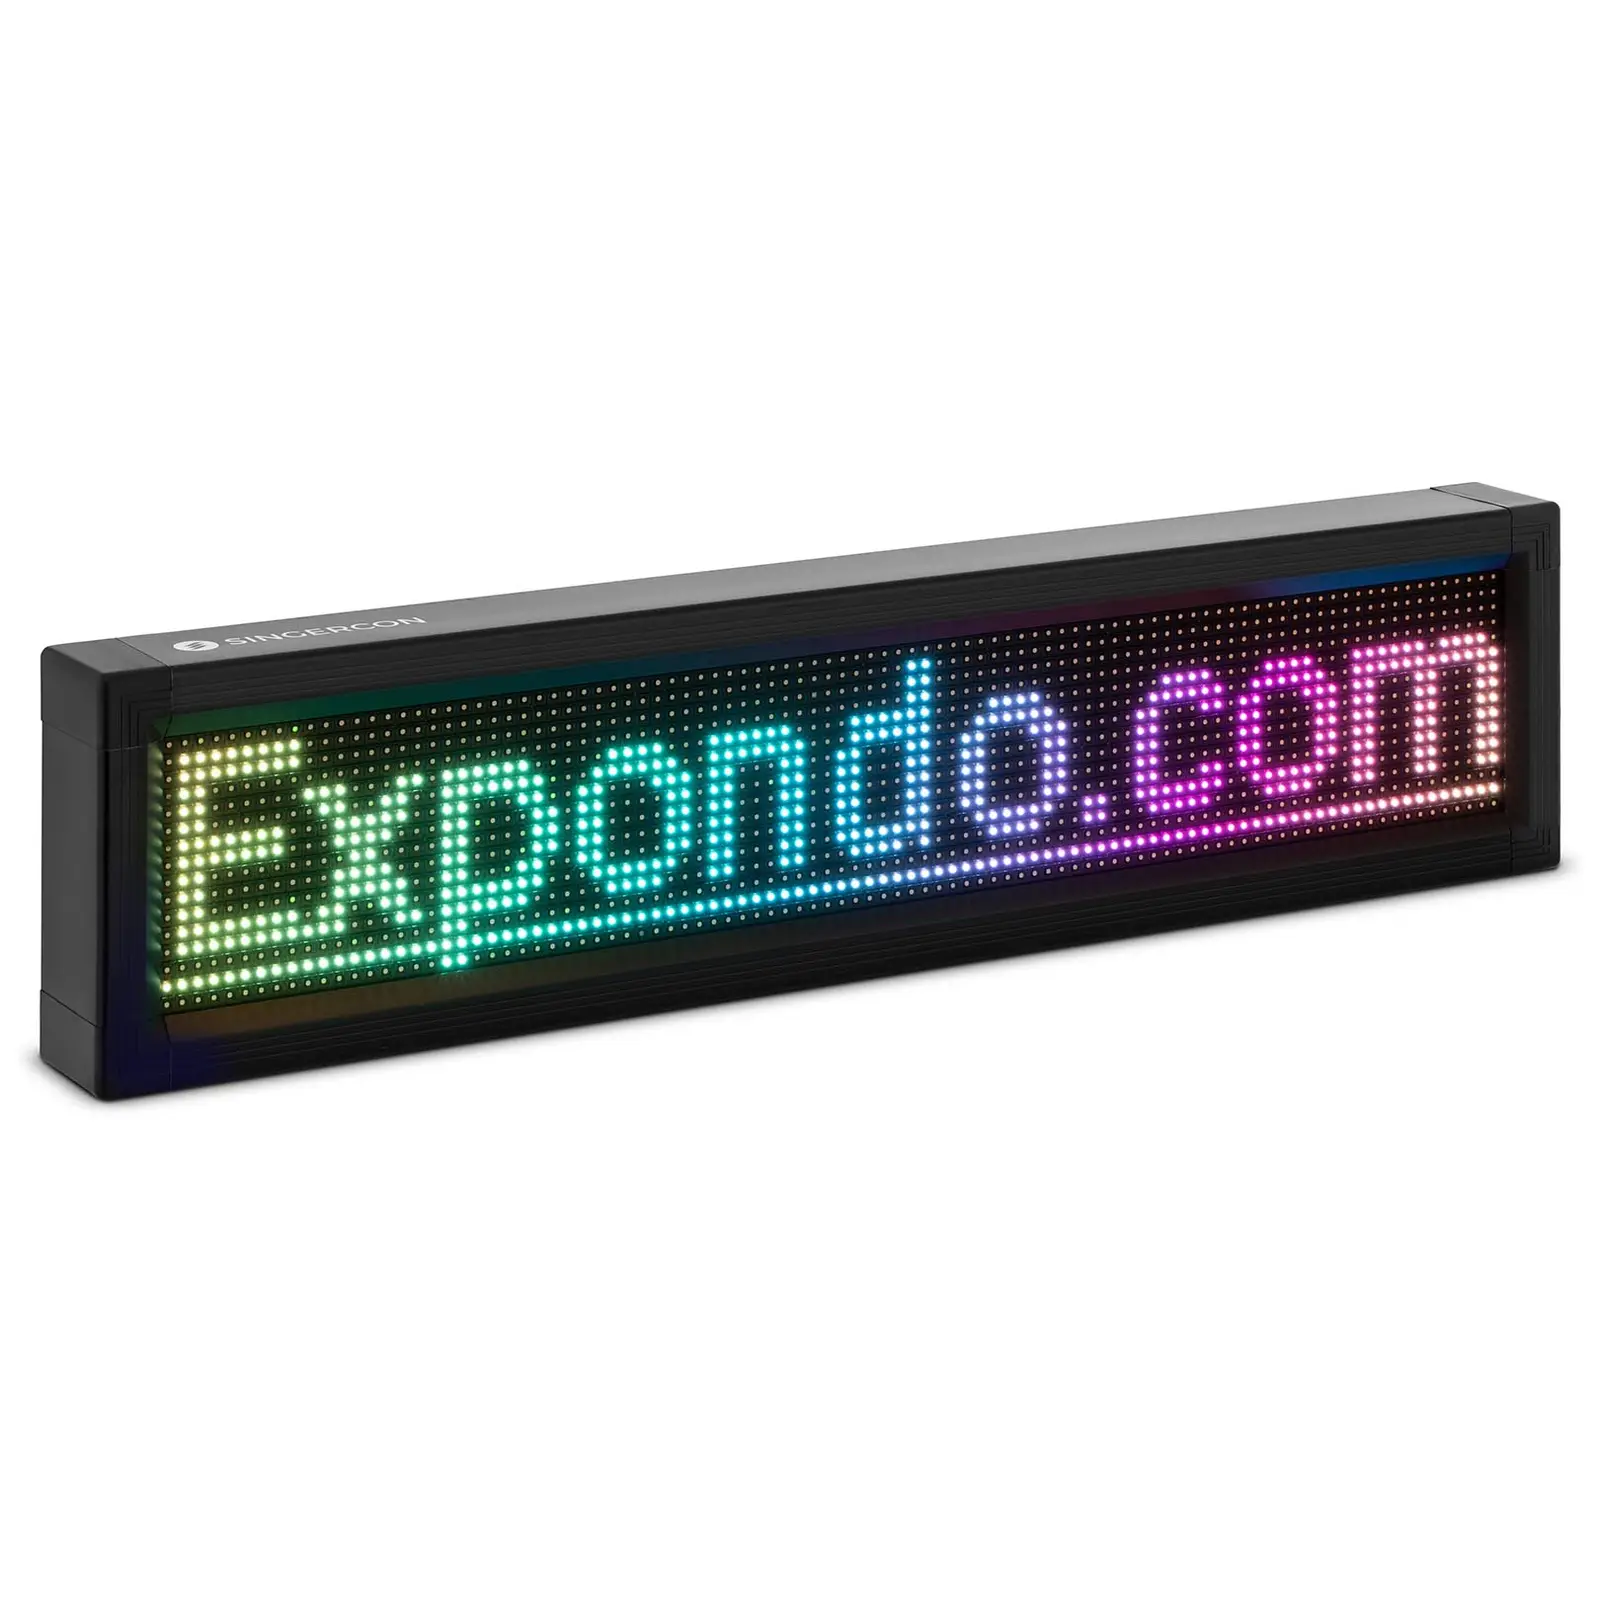 LED displej - 96 x 16 LED - 67 x 19 cm - programovatelný iOS / Android